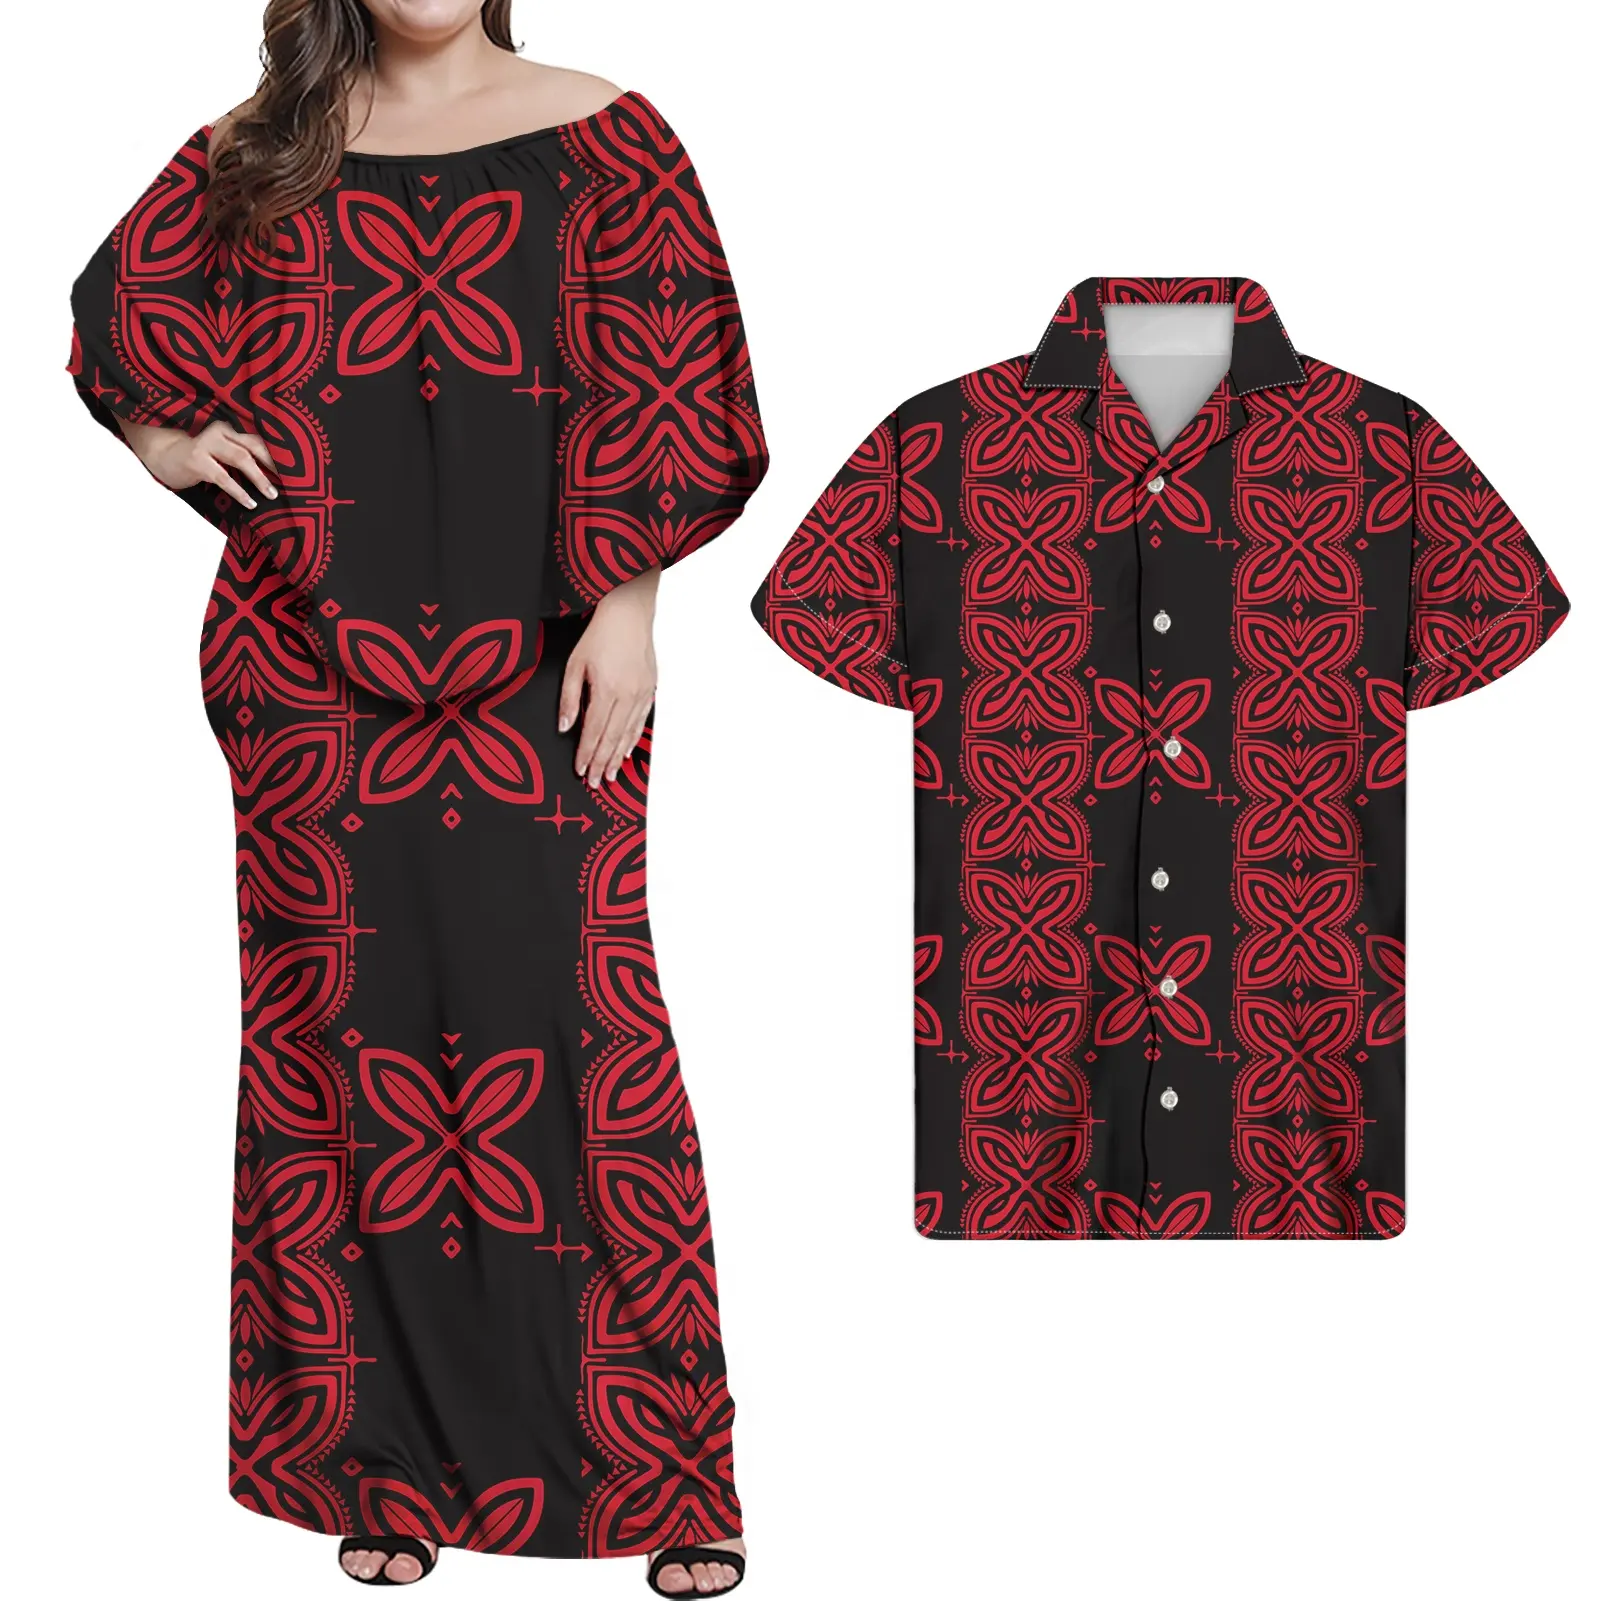 Couple Clothing Womens Evening Dress Match Men's Shirt Print Samoa Dress Red Polynesian Tribal Print Women Sleeveless Dress